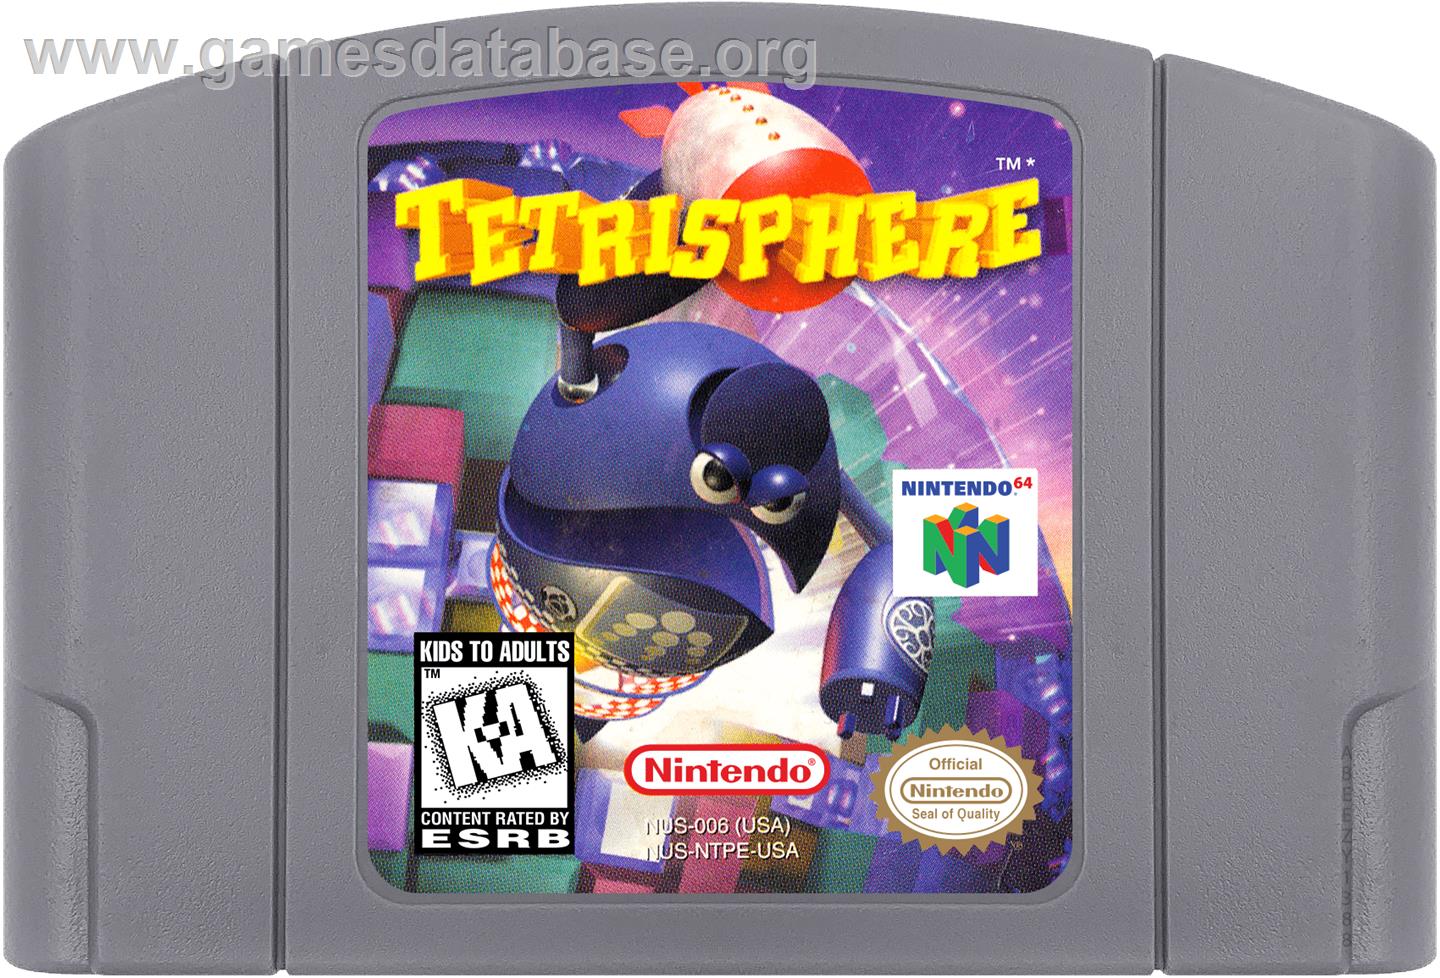 Tetrisphere - Nintendo N64 - Artwork - Cartridge